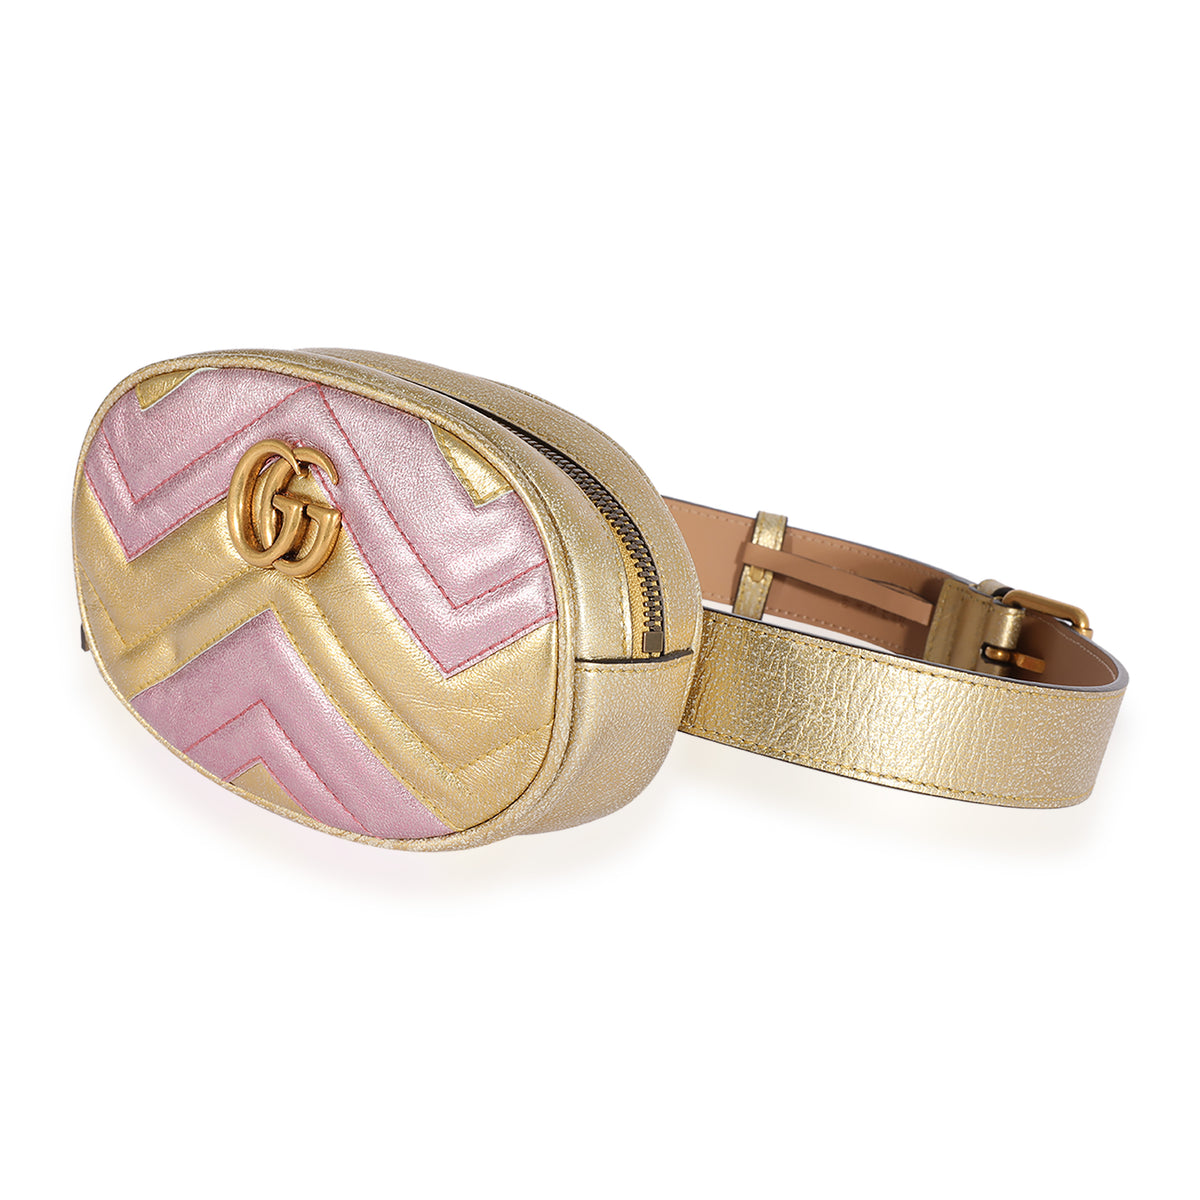 Metallic Gold & Pink Matelassé Marmont Belt Bag